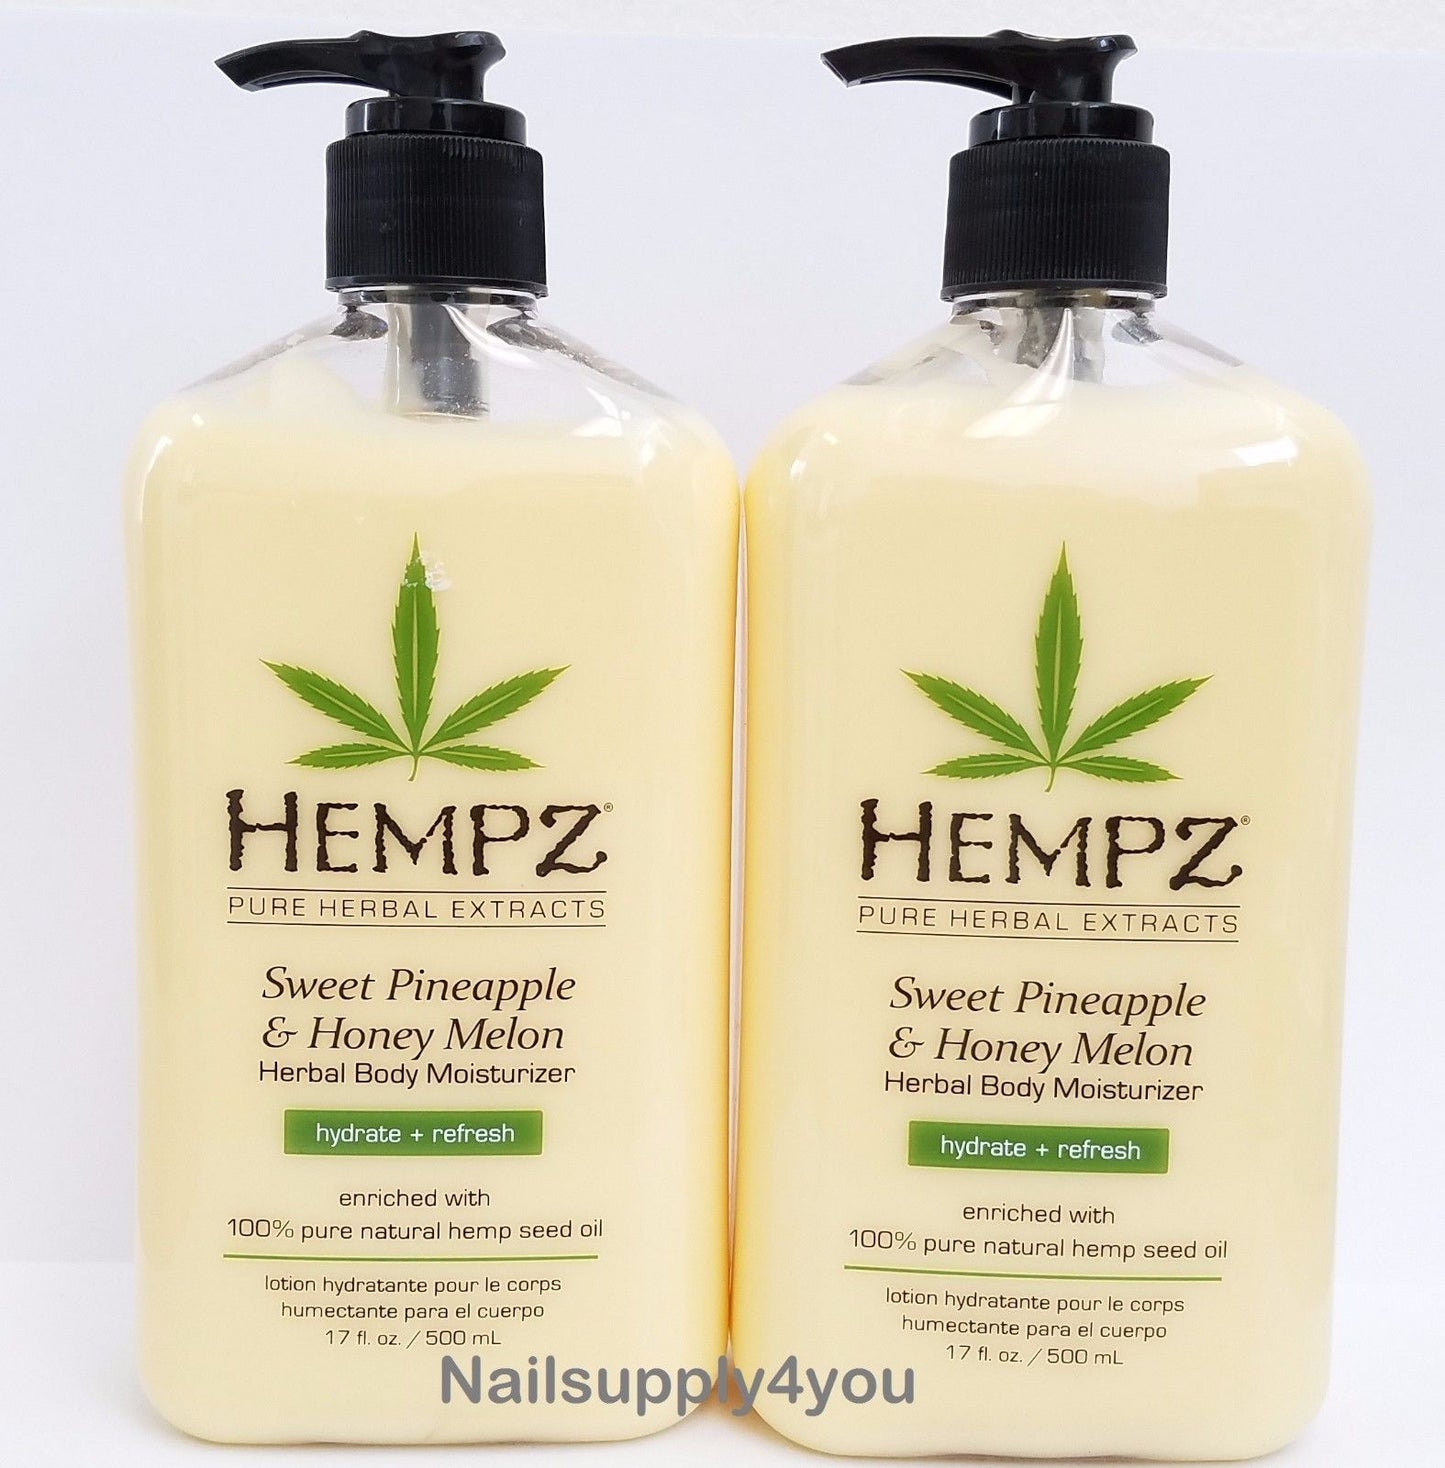 Hempz Lotion Herbal Body moisturizer Sweet Pineapple & Honey Melon 17oz - Pack of 2